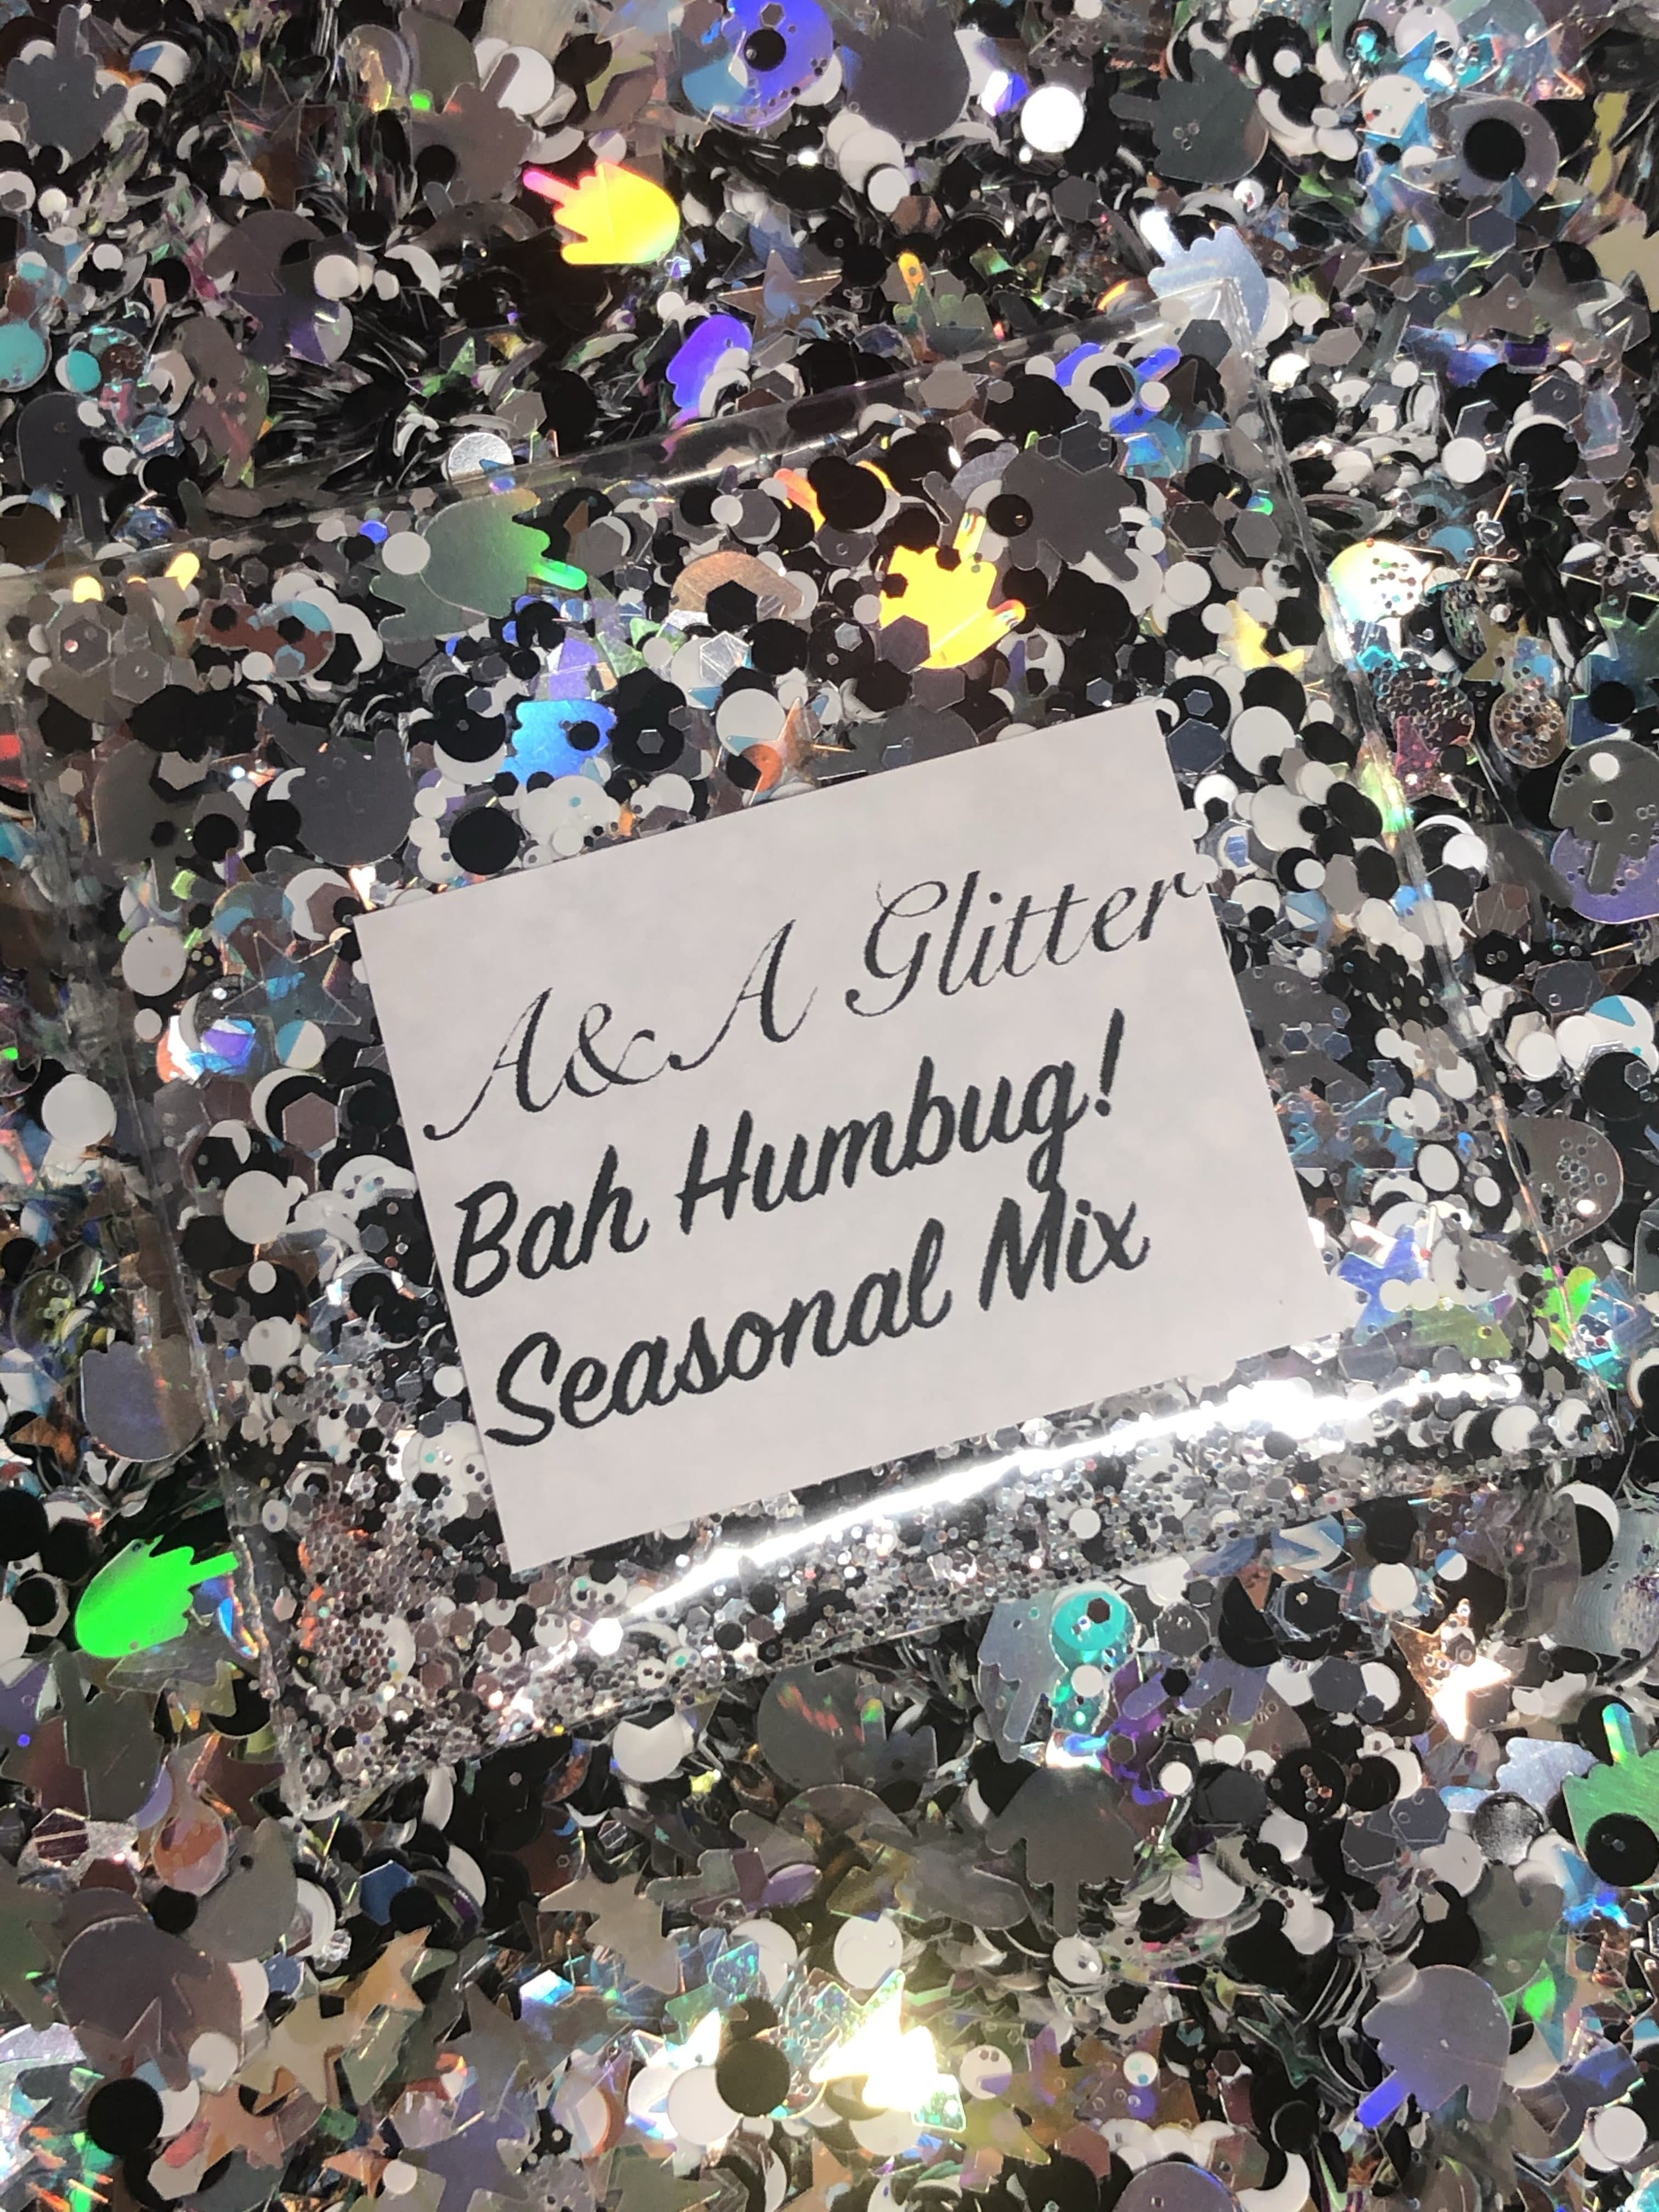 Bah Humbug! - Seasonal Mix